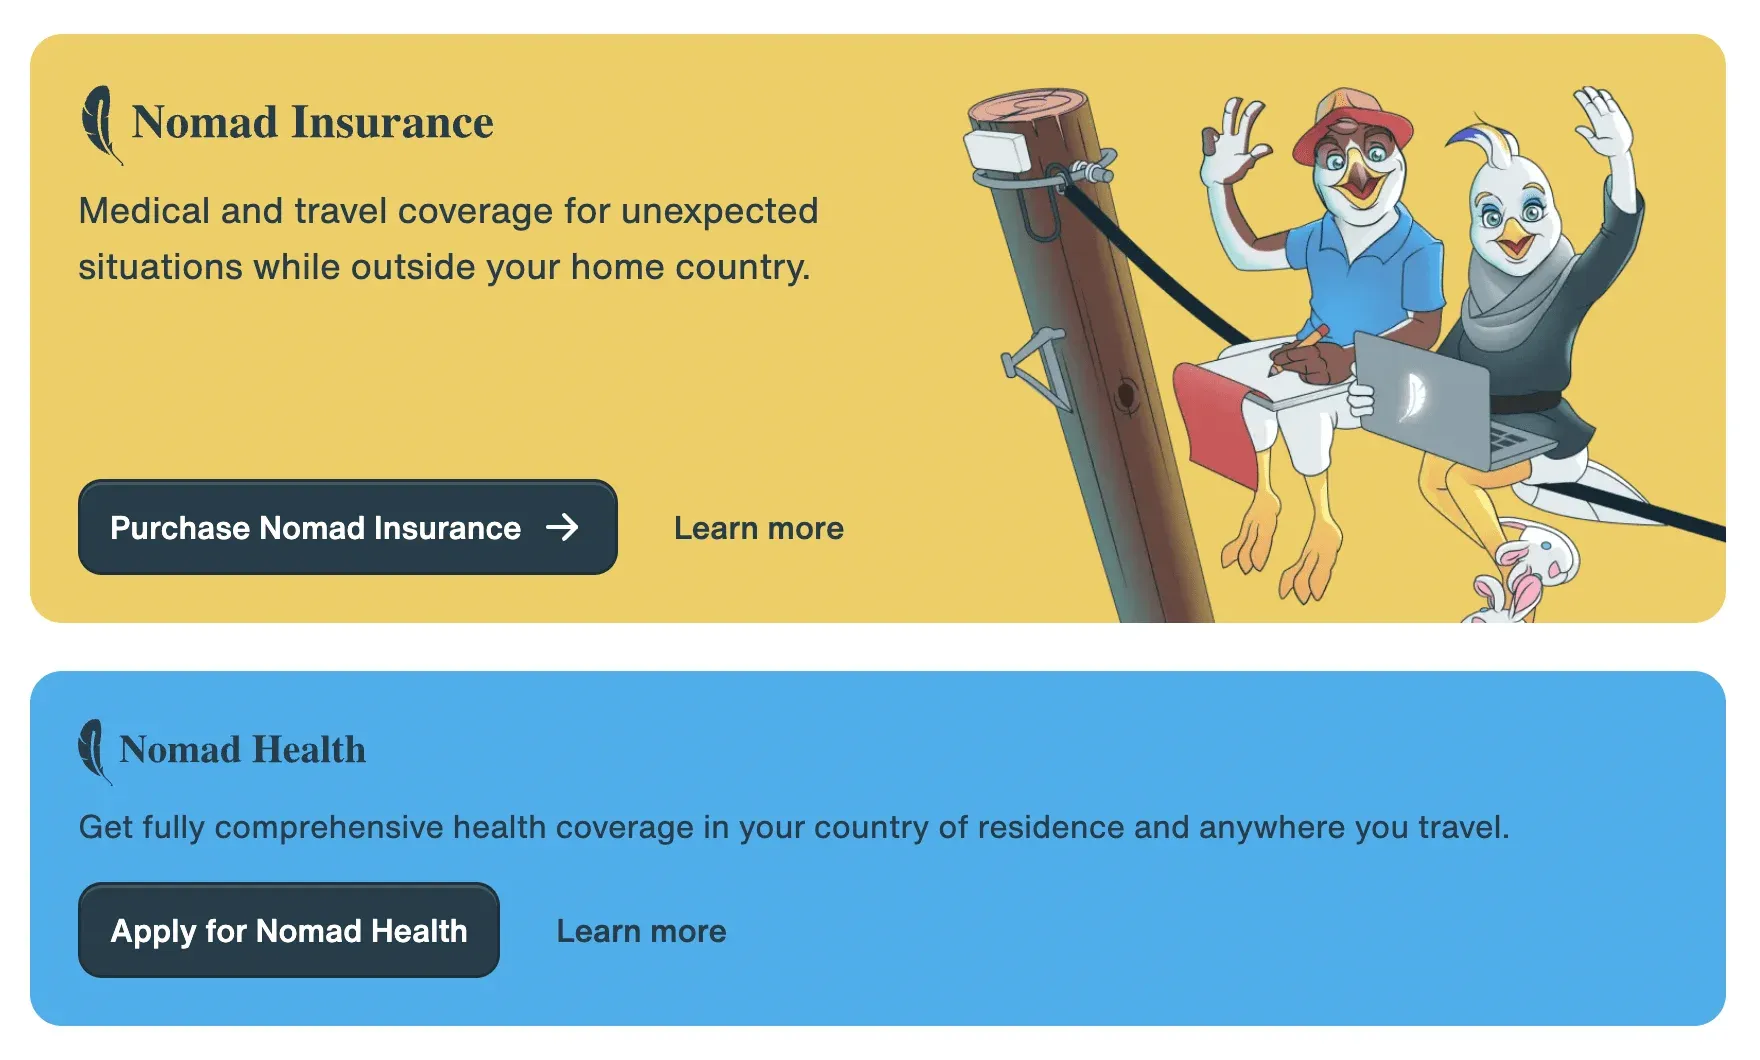 Nomad Insurance versus Nomad Health